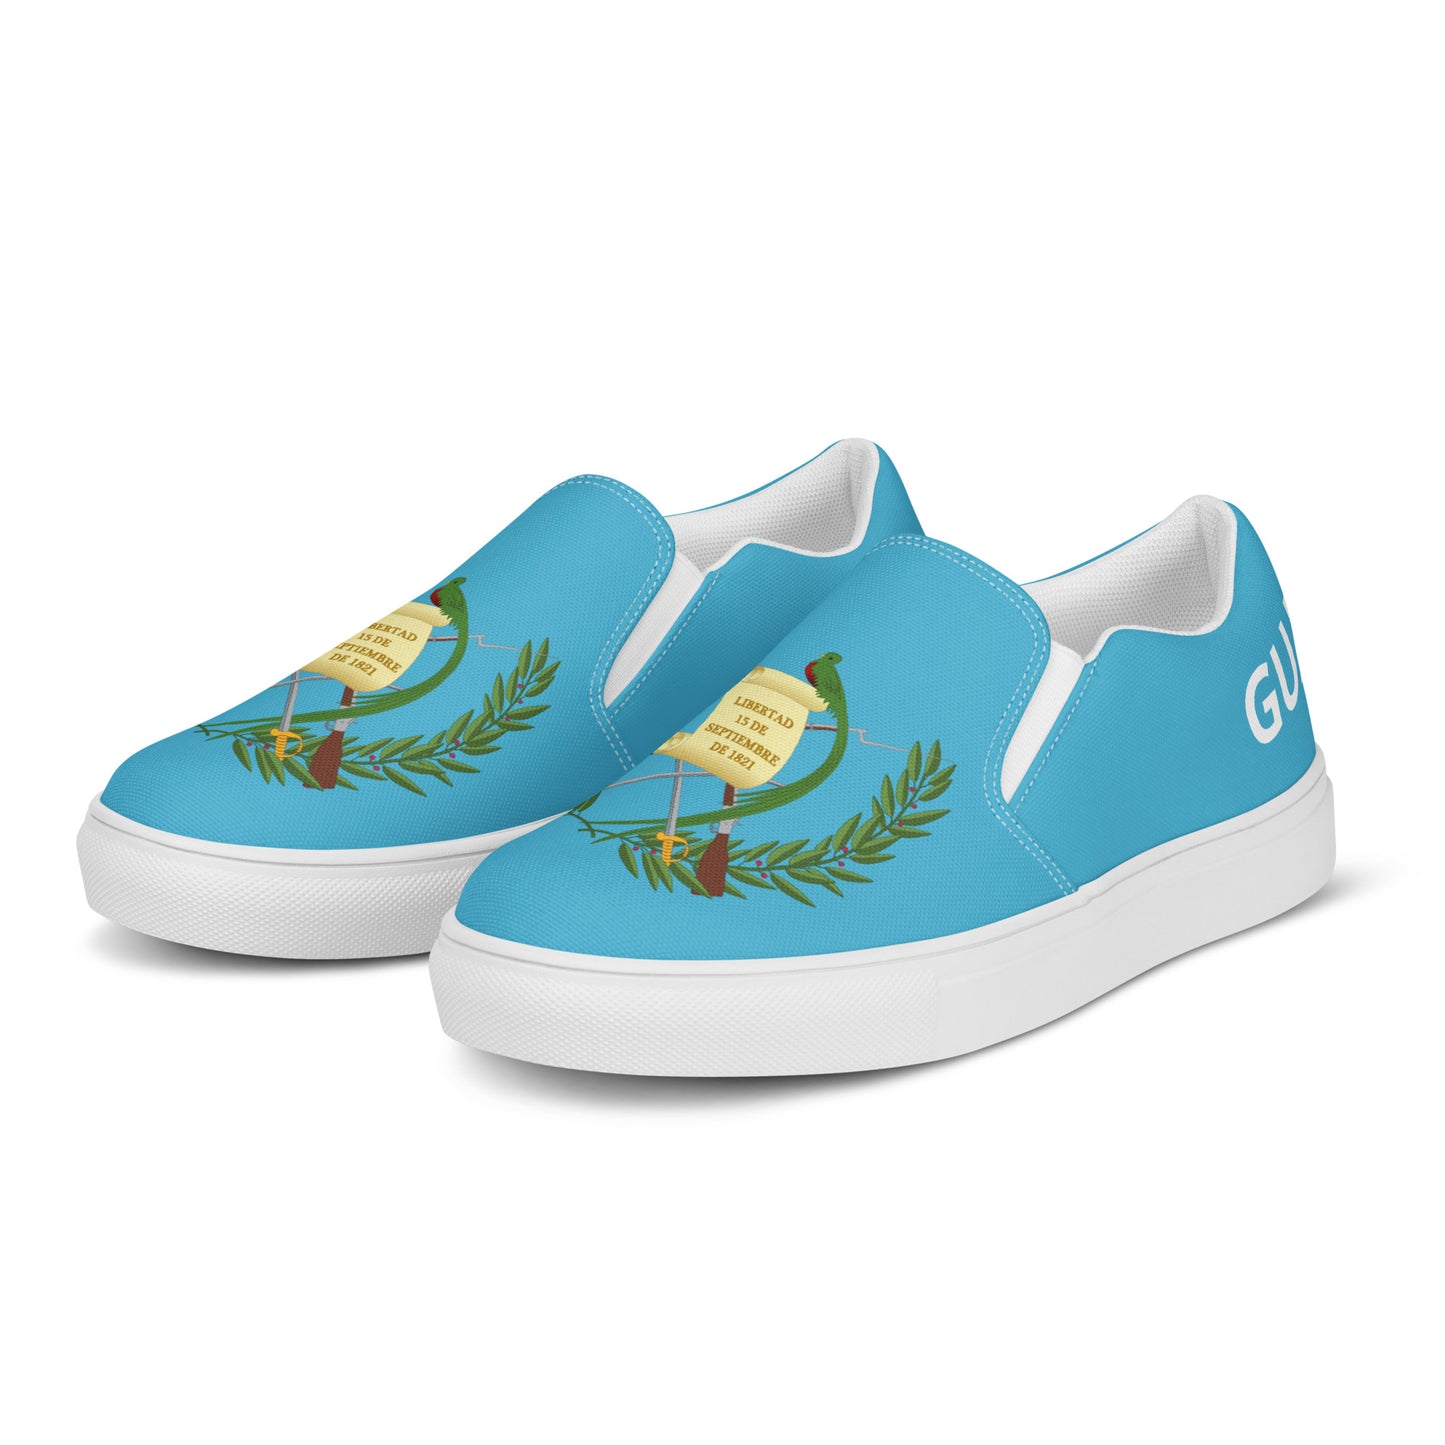 Guatemala - Women - Sky - Slip-on shoes